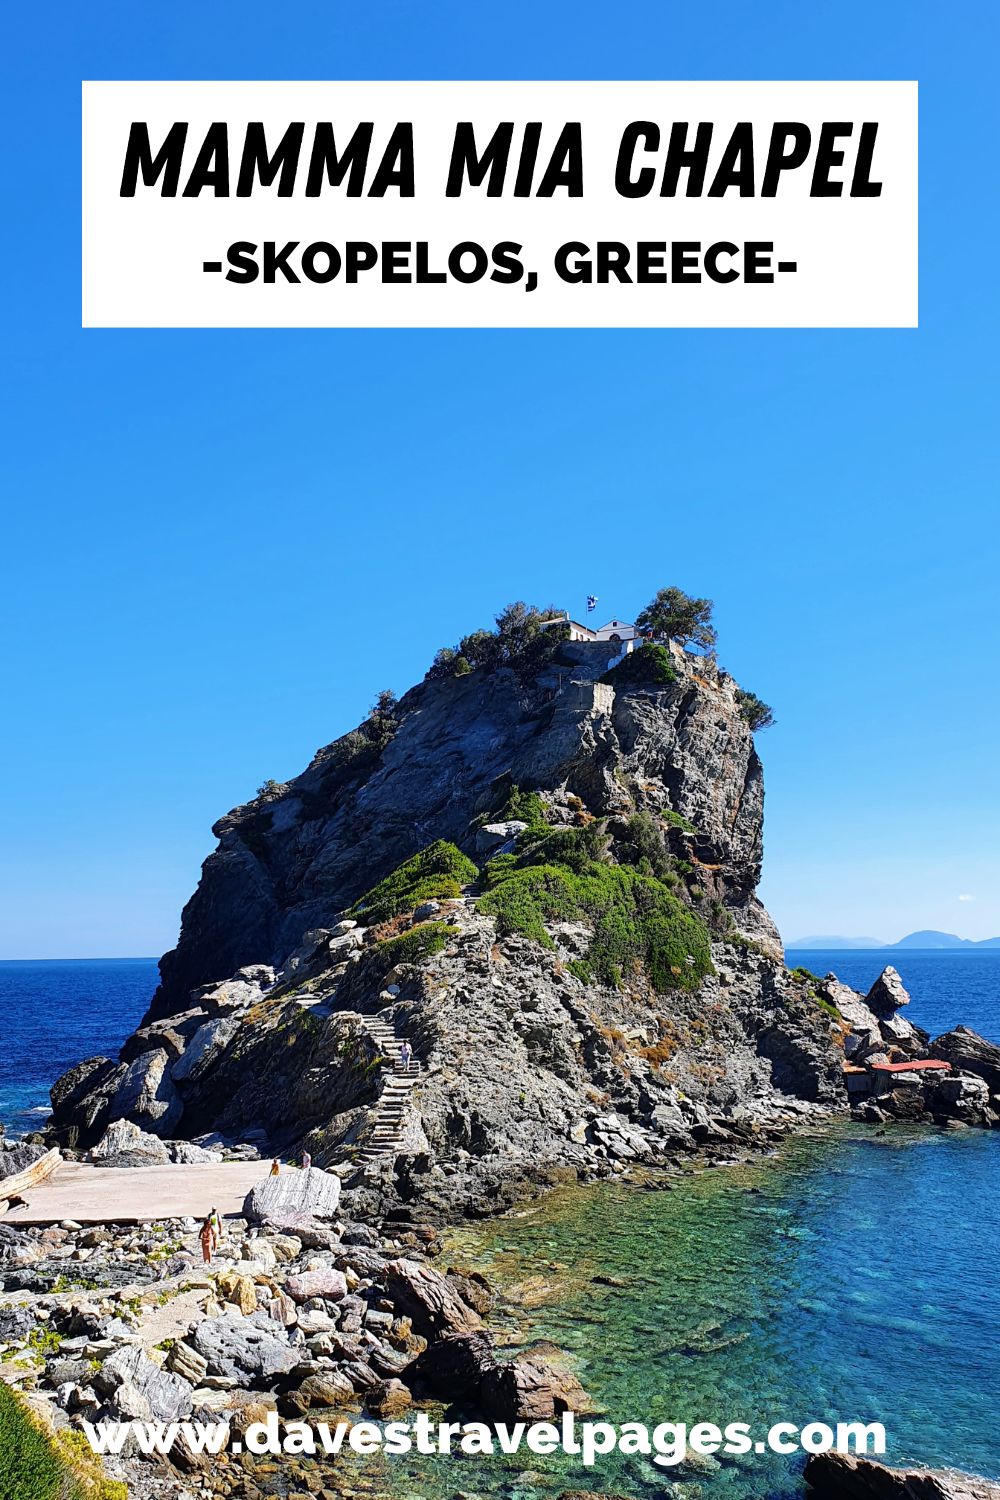 Mamma Mia Chapel, Skopelos, Greece